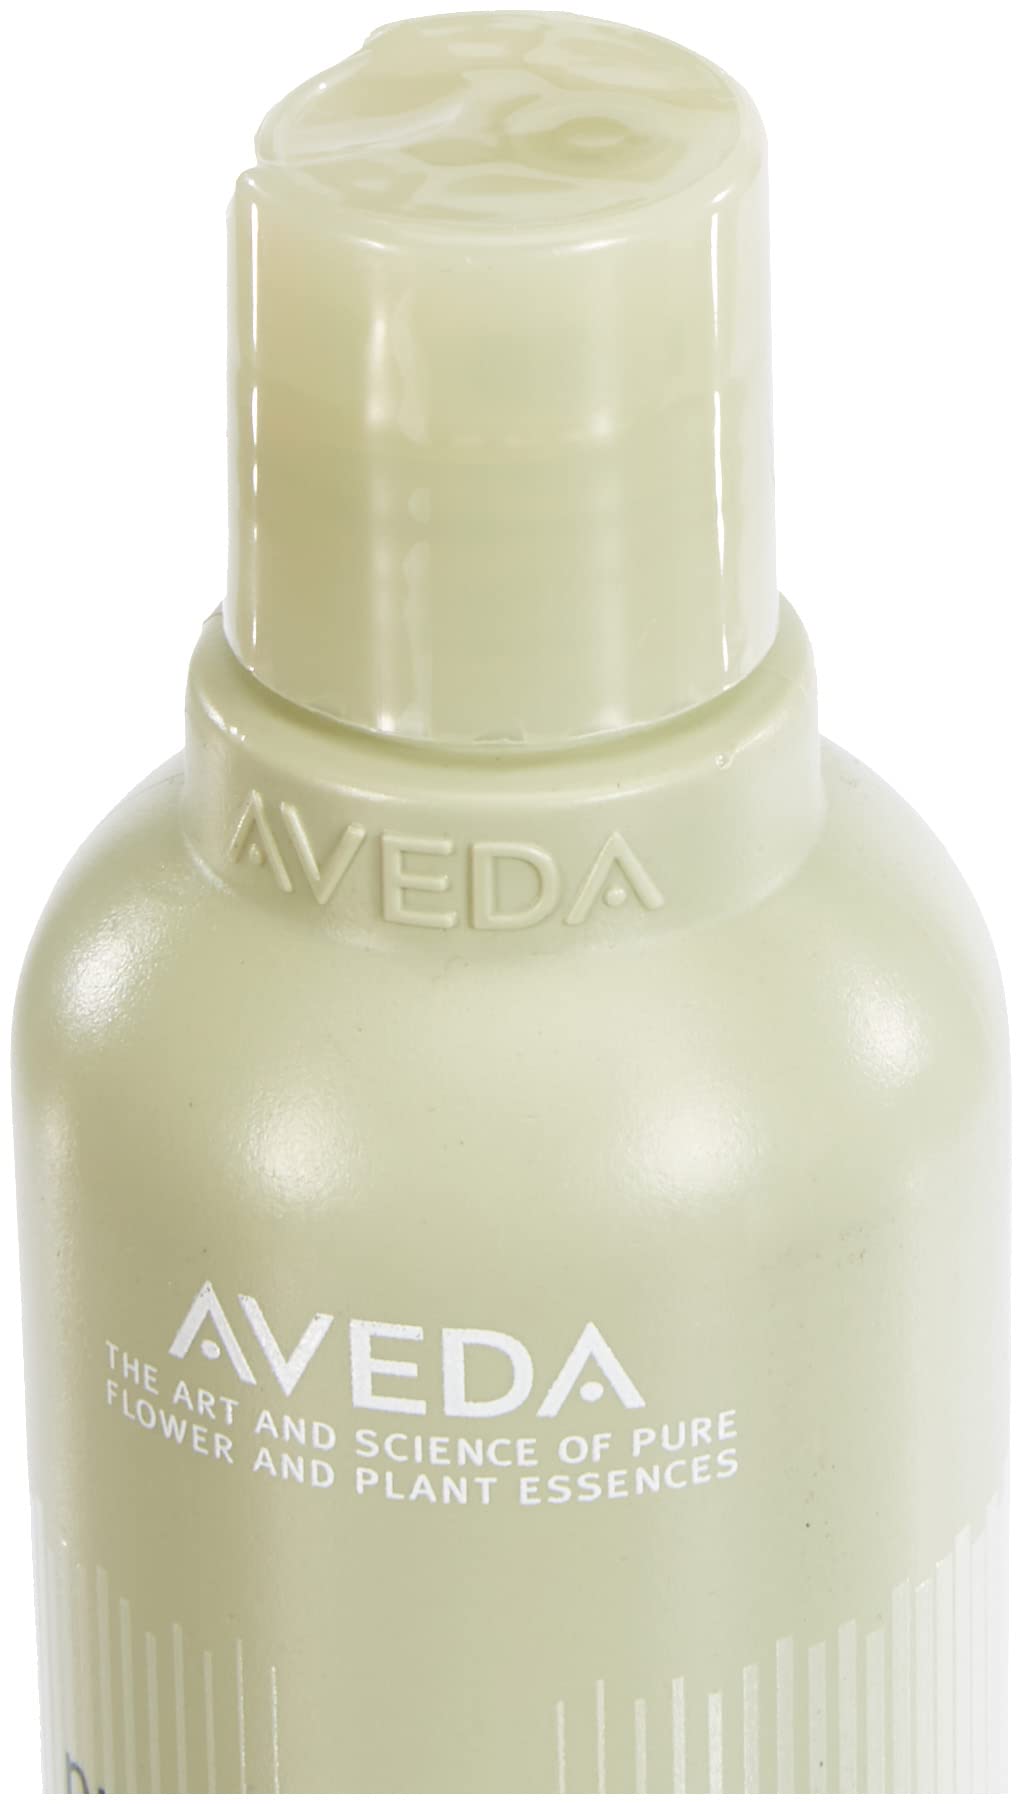 Aveda Pure Abundance Volumizing Shampoo, Peppermint, 8.5 Fl Oz